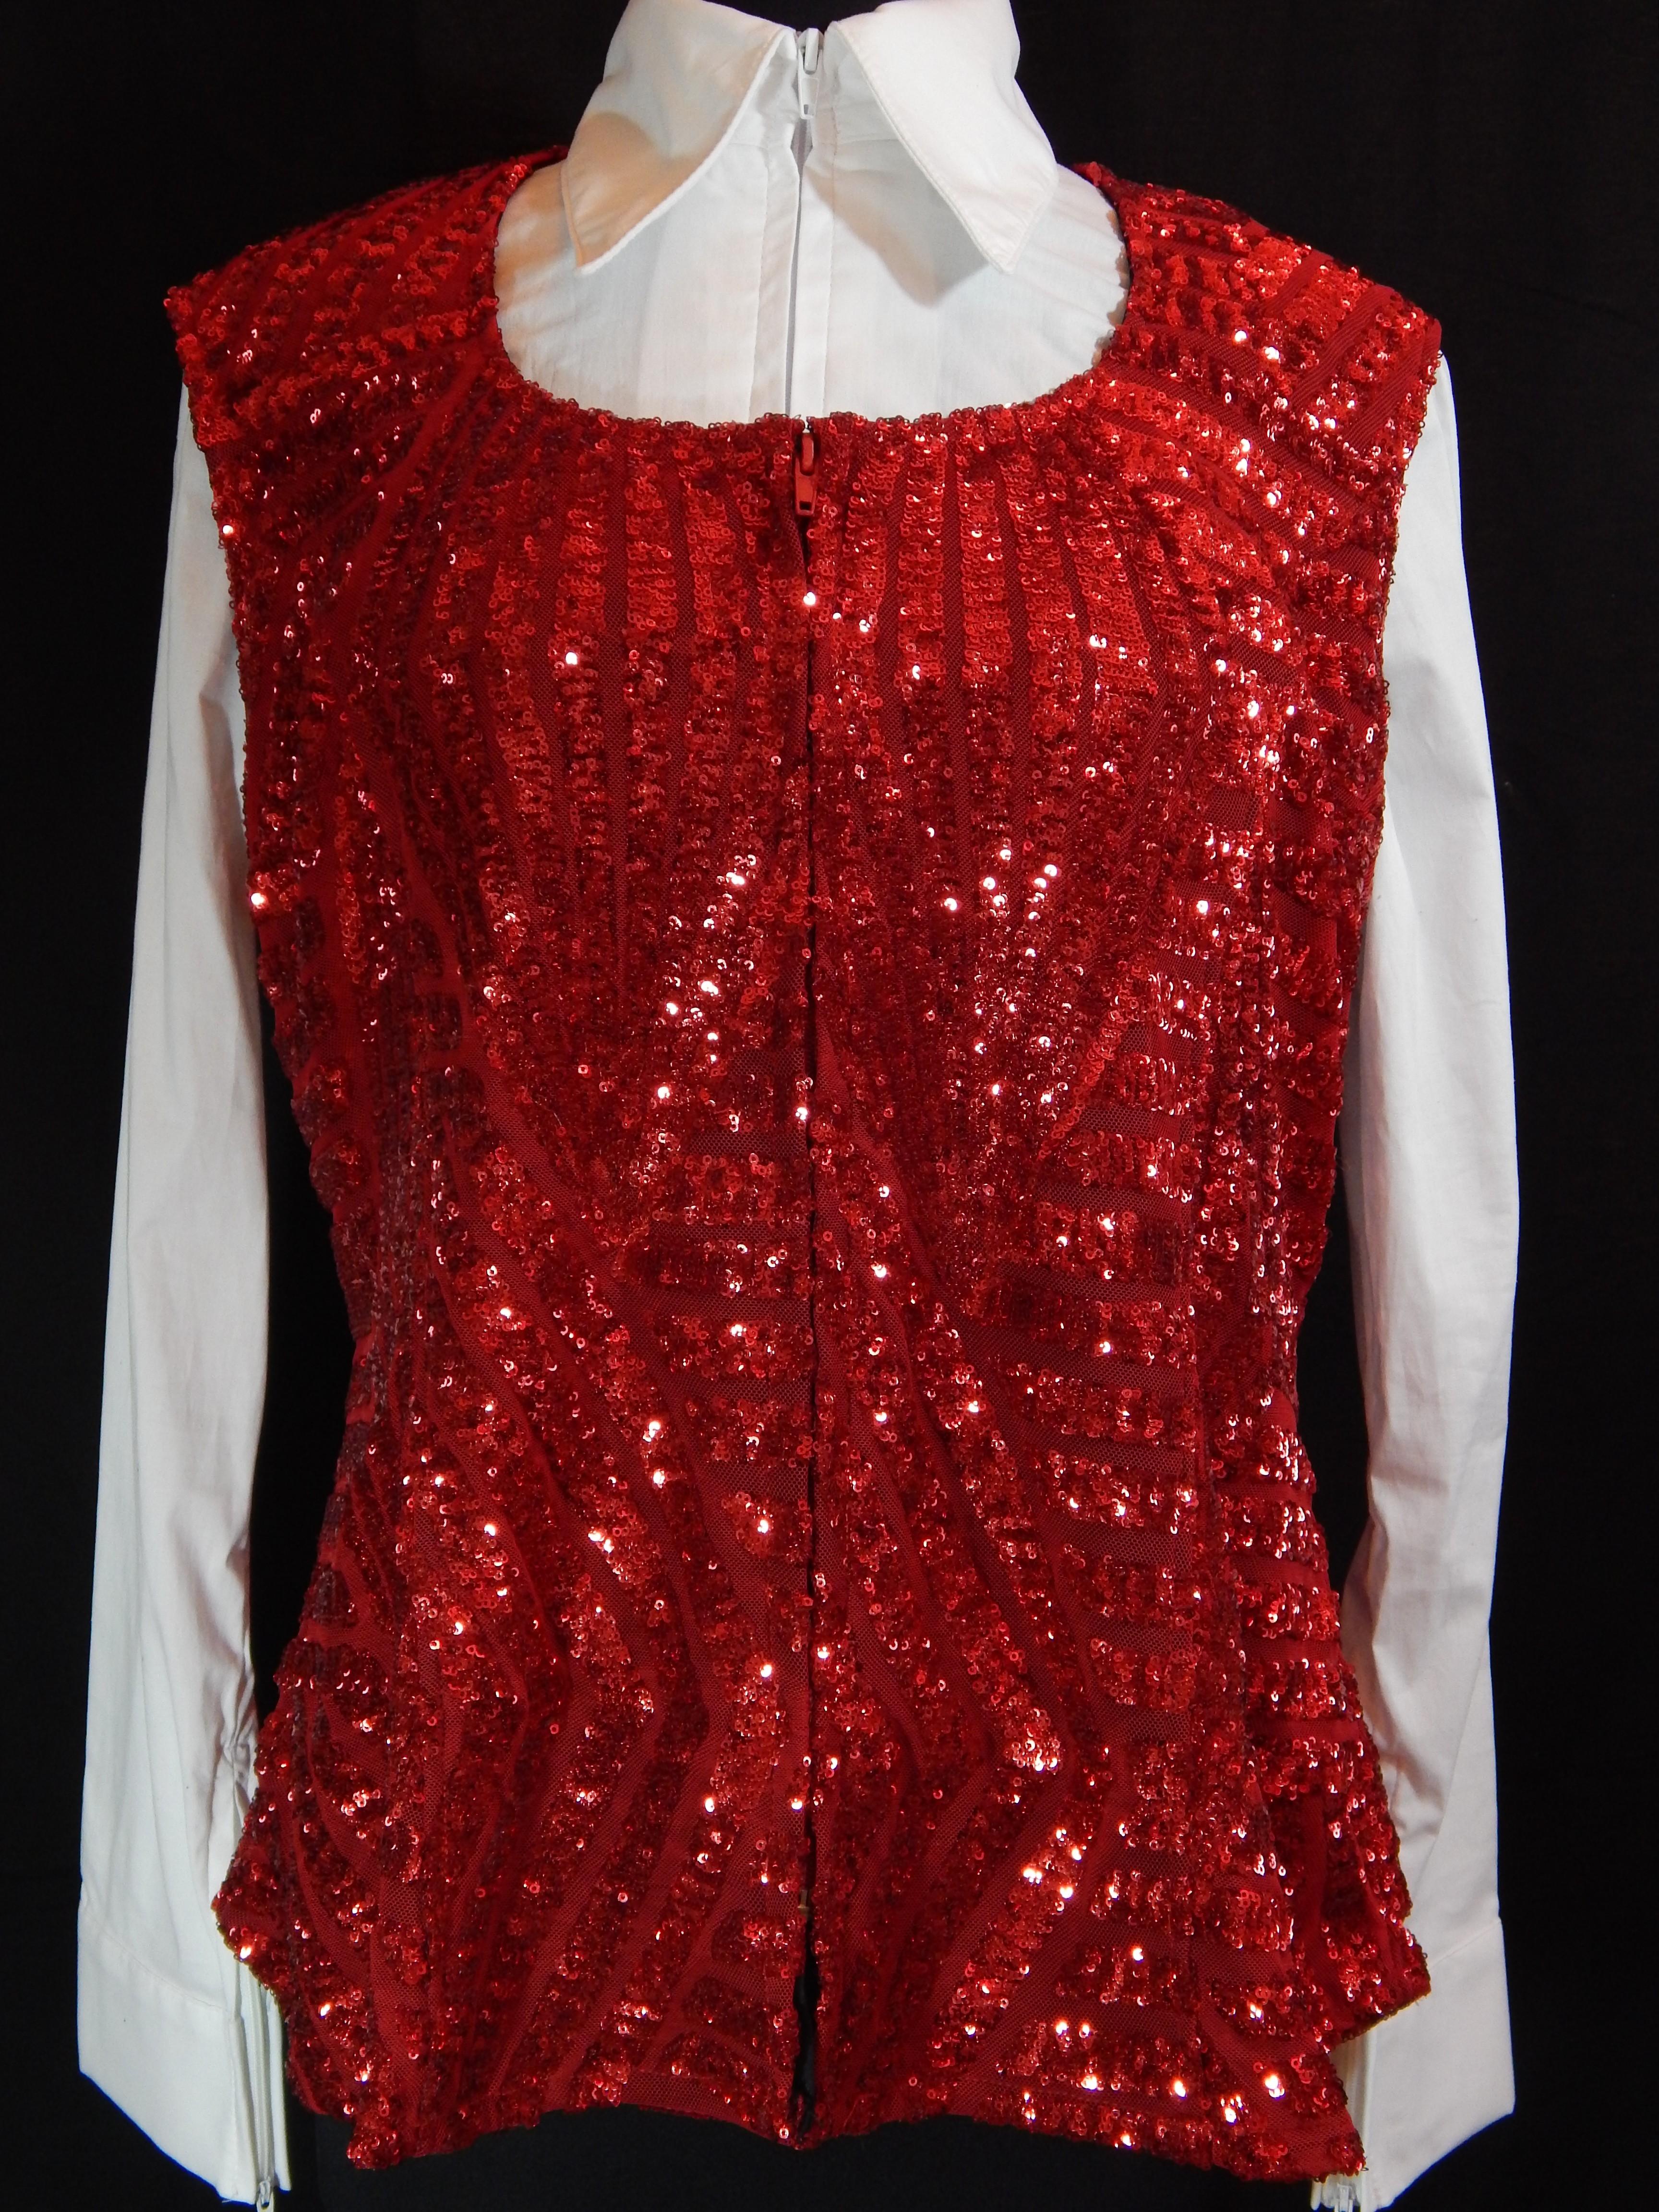 Plus Size Lined Show Vest - Red Sequin